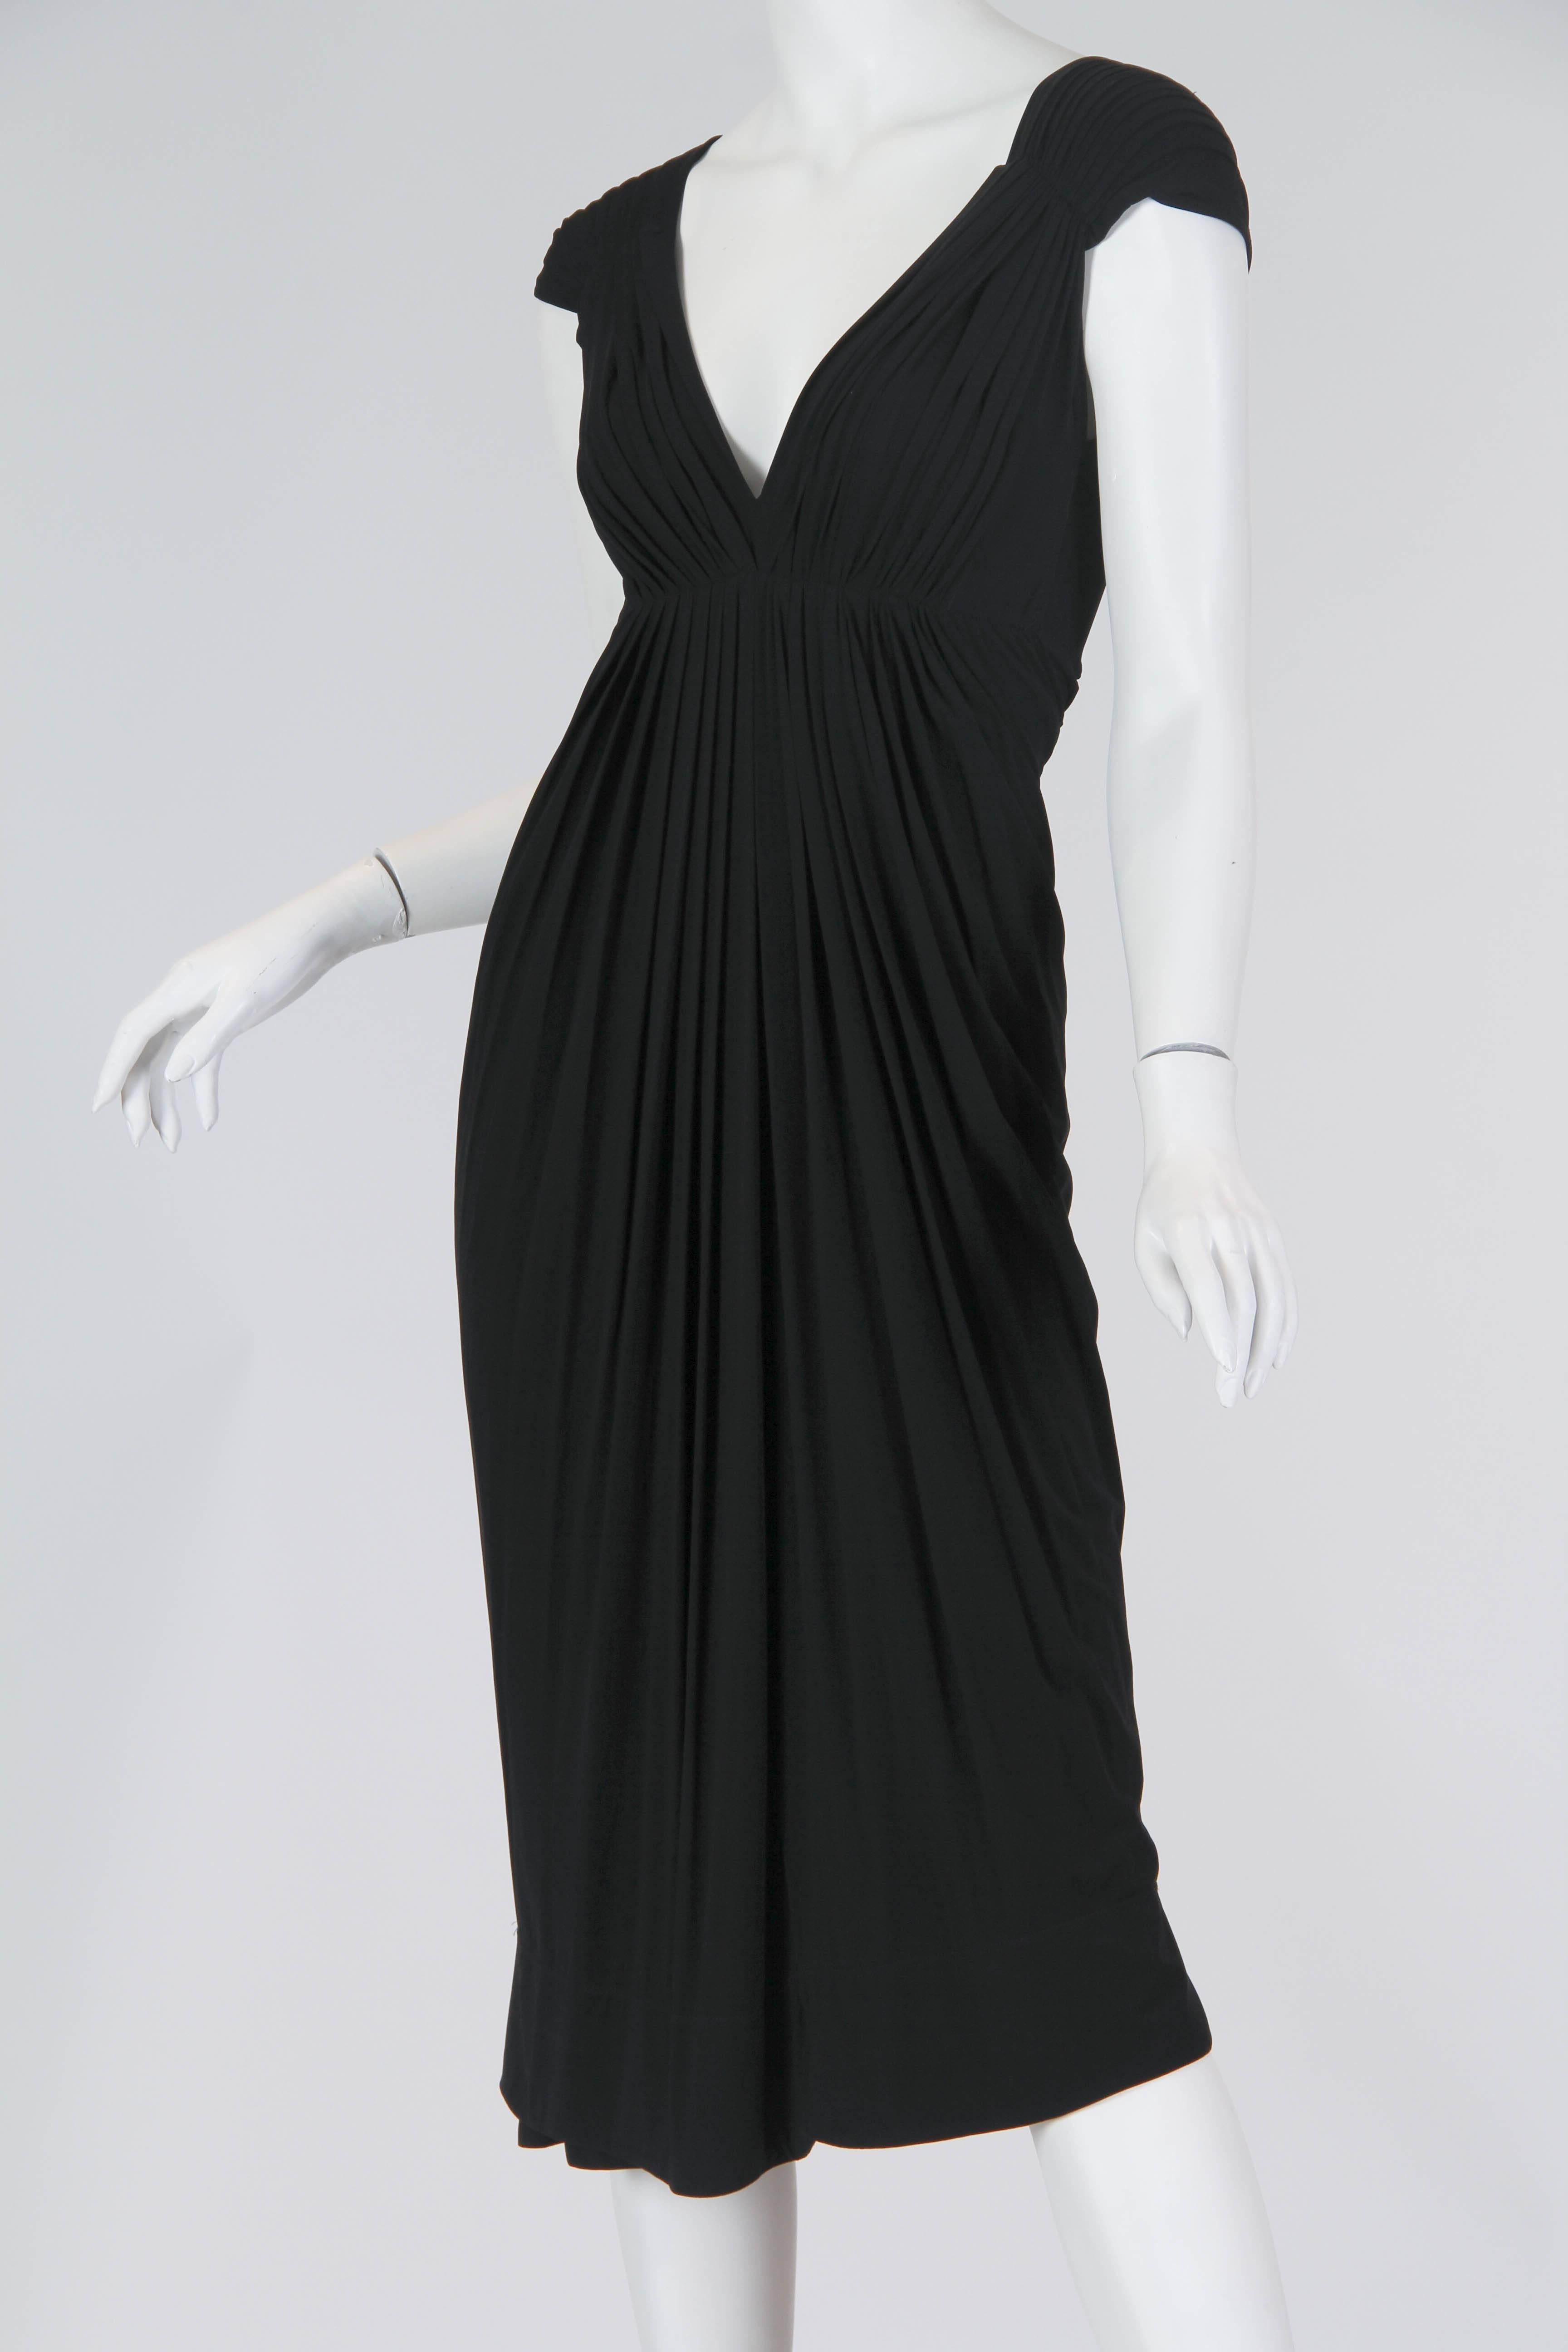 Donna Karan Draped Jersey Dress 1